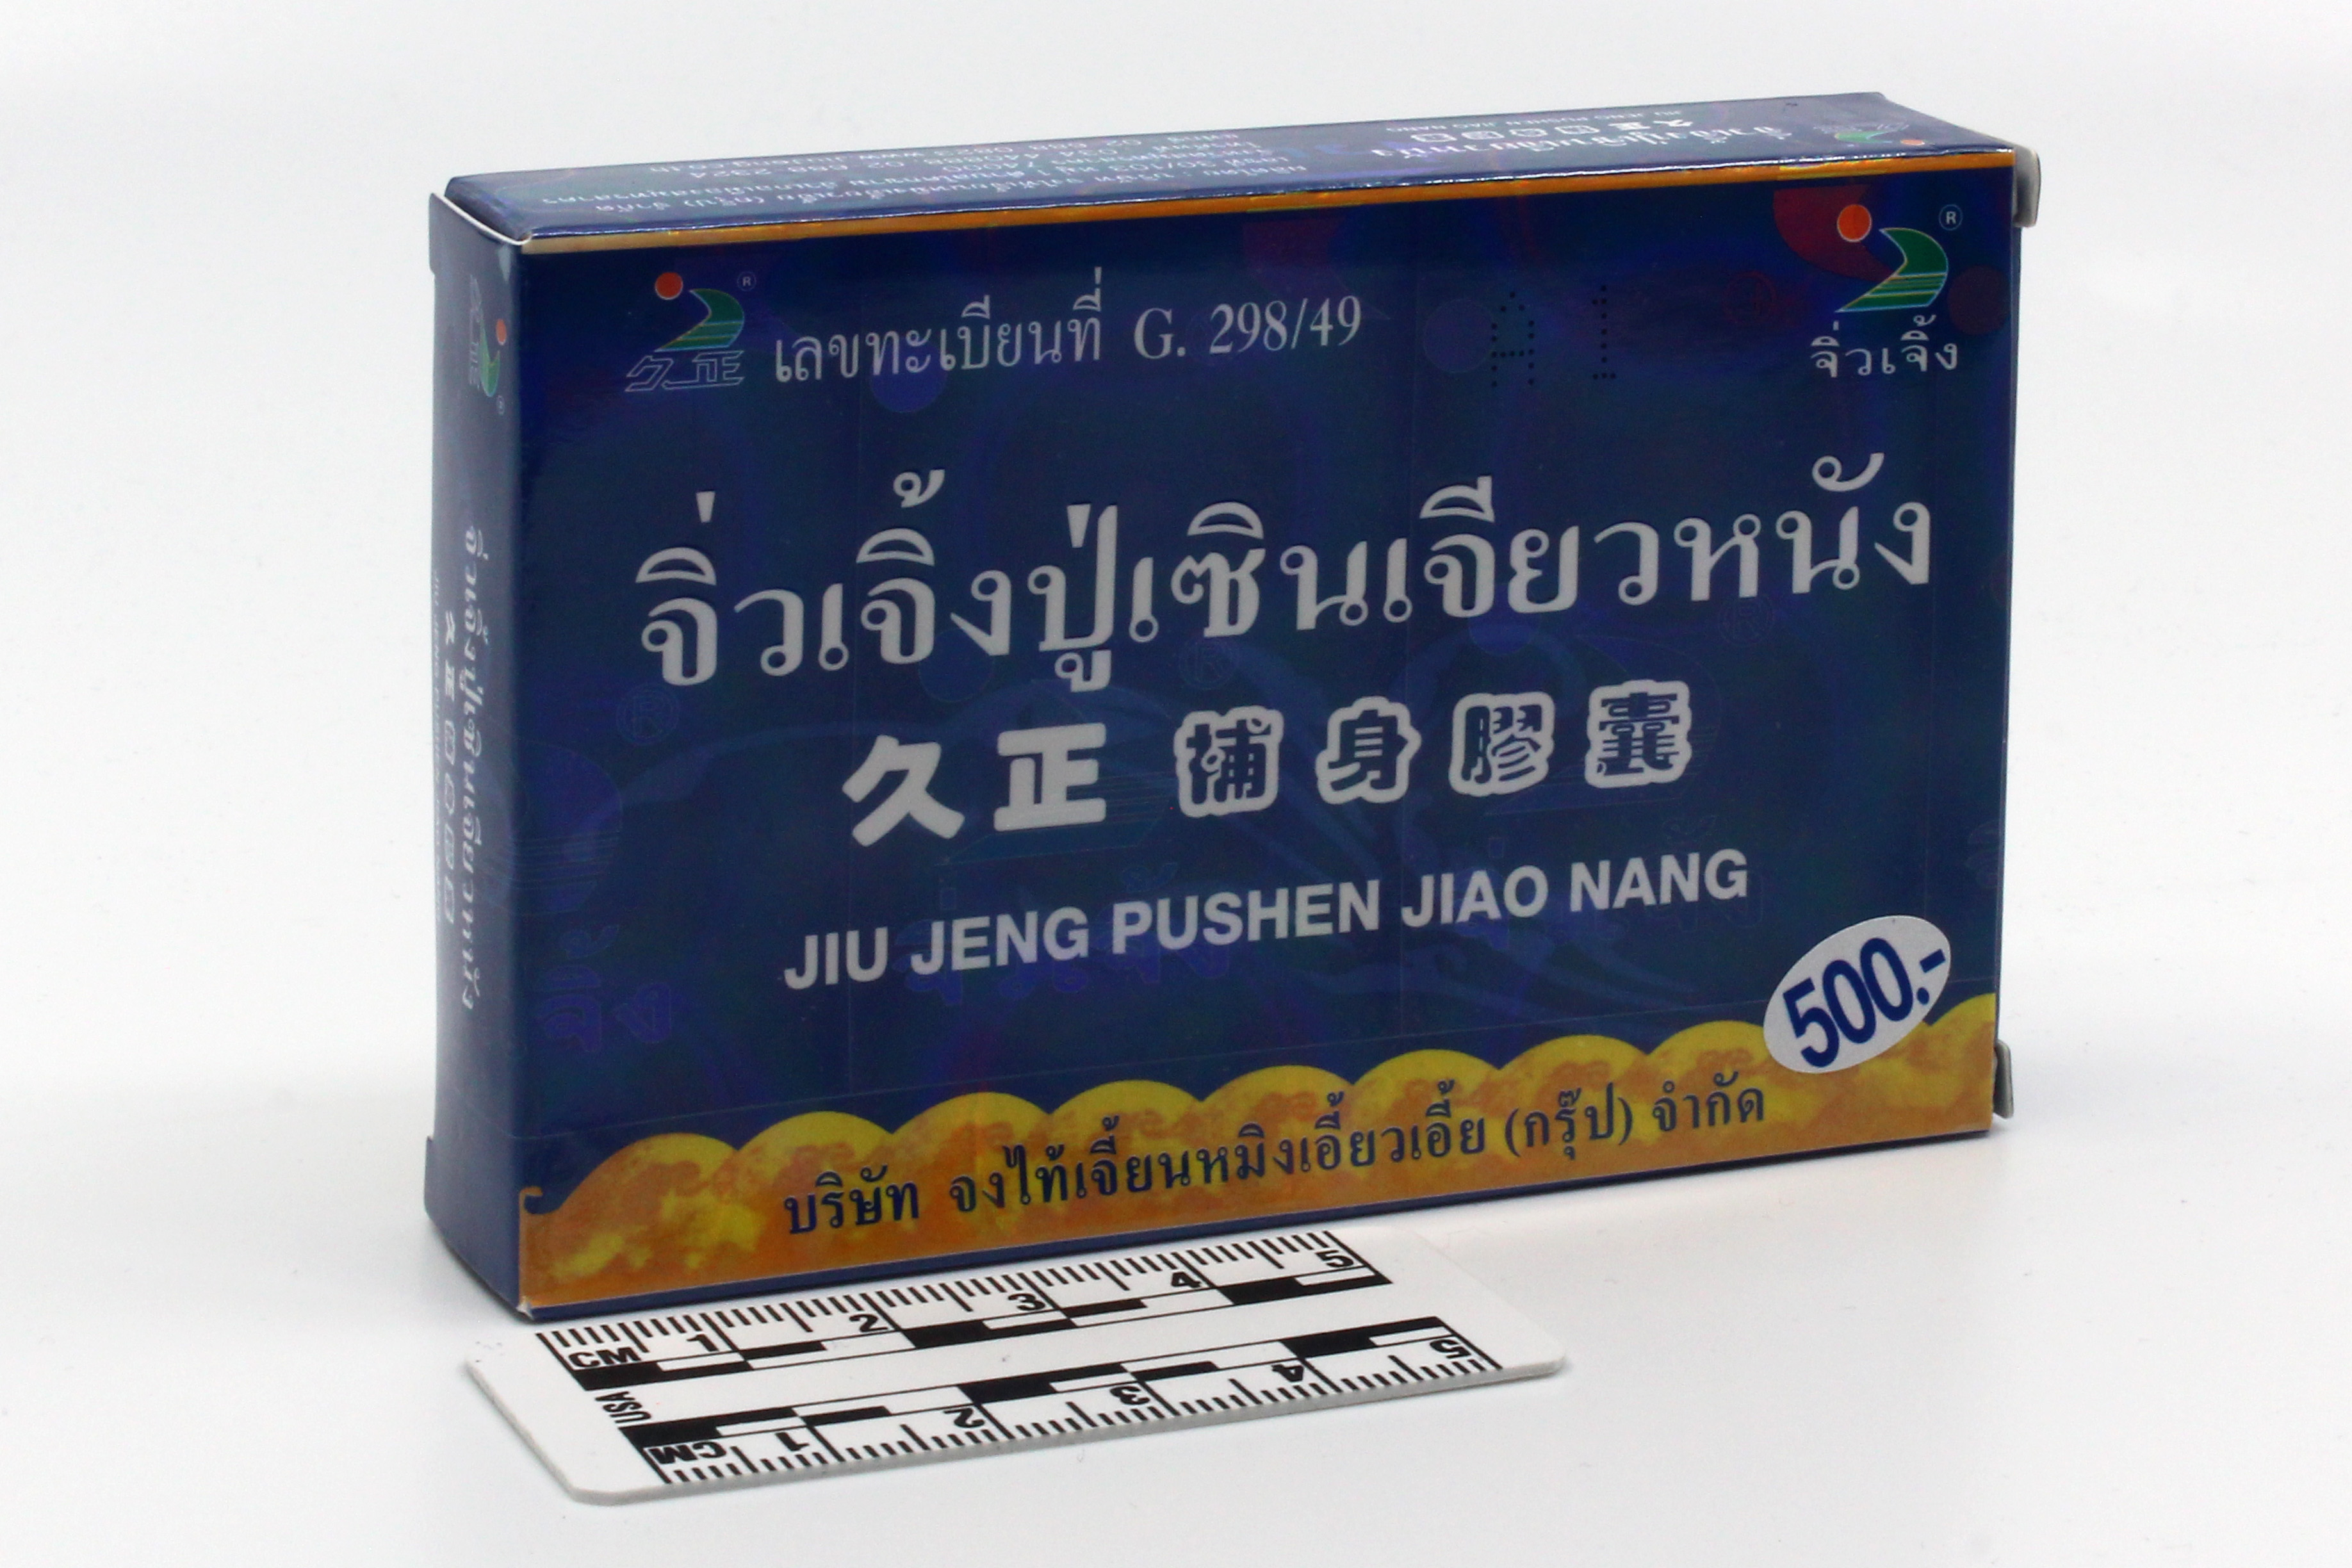 Image of the illigal product: Jiu Jeng Pushen Jiao Nang